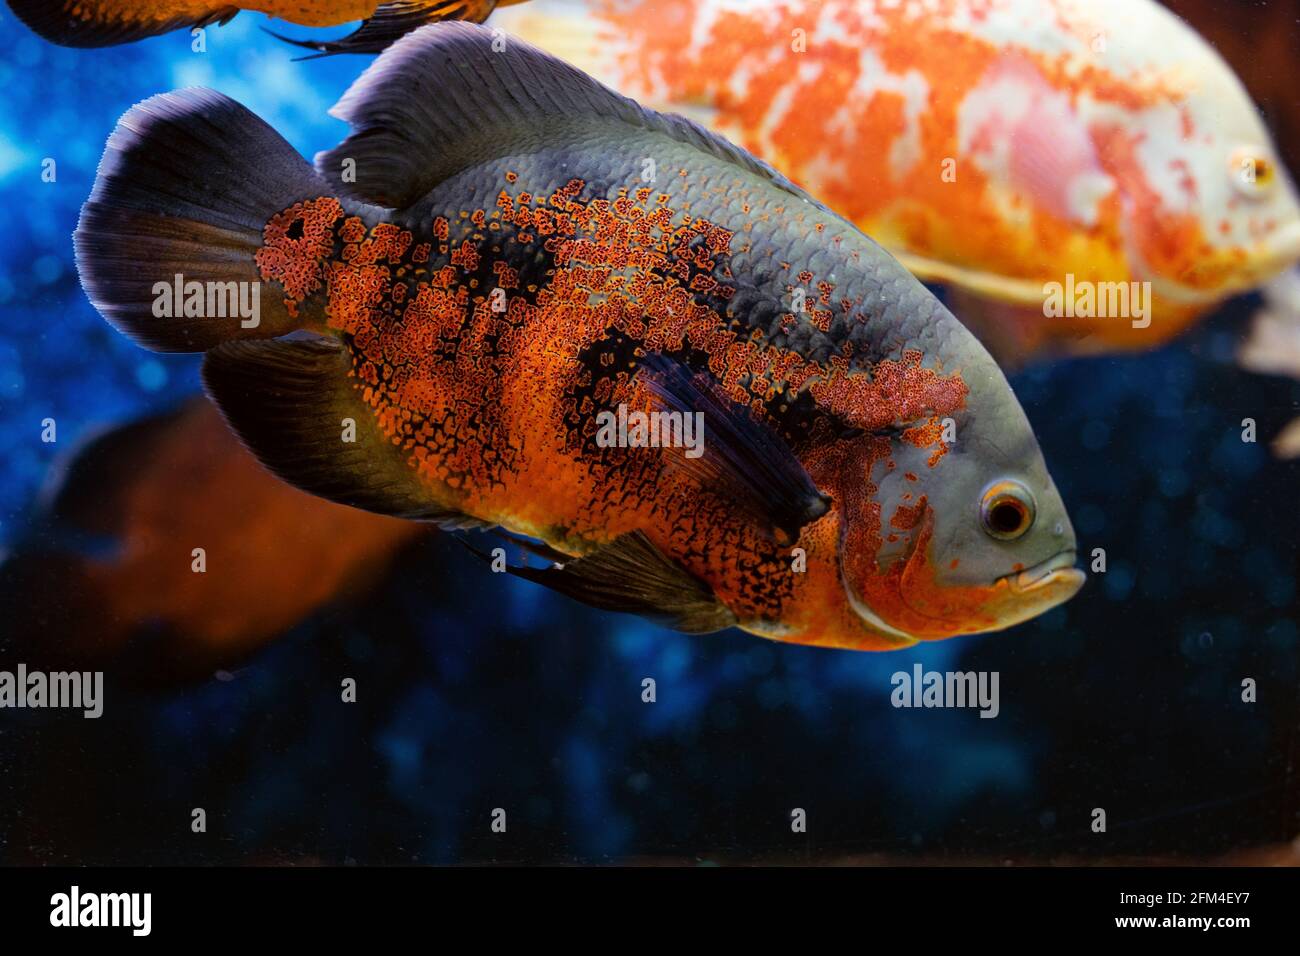 Tiger Oscar Fish close-up. Adult tropical fish astronotus ocellatus in aquarium Stock Photo